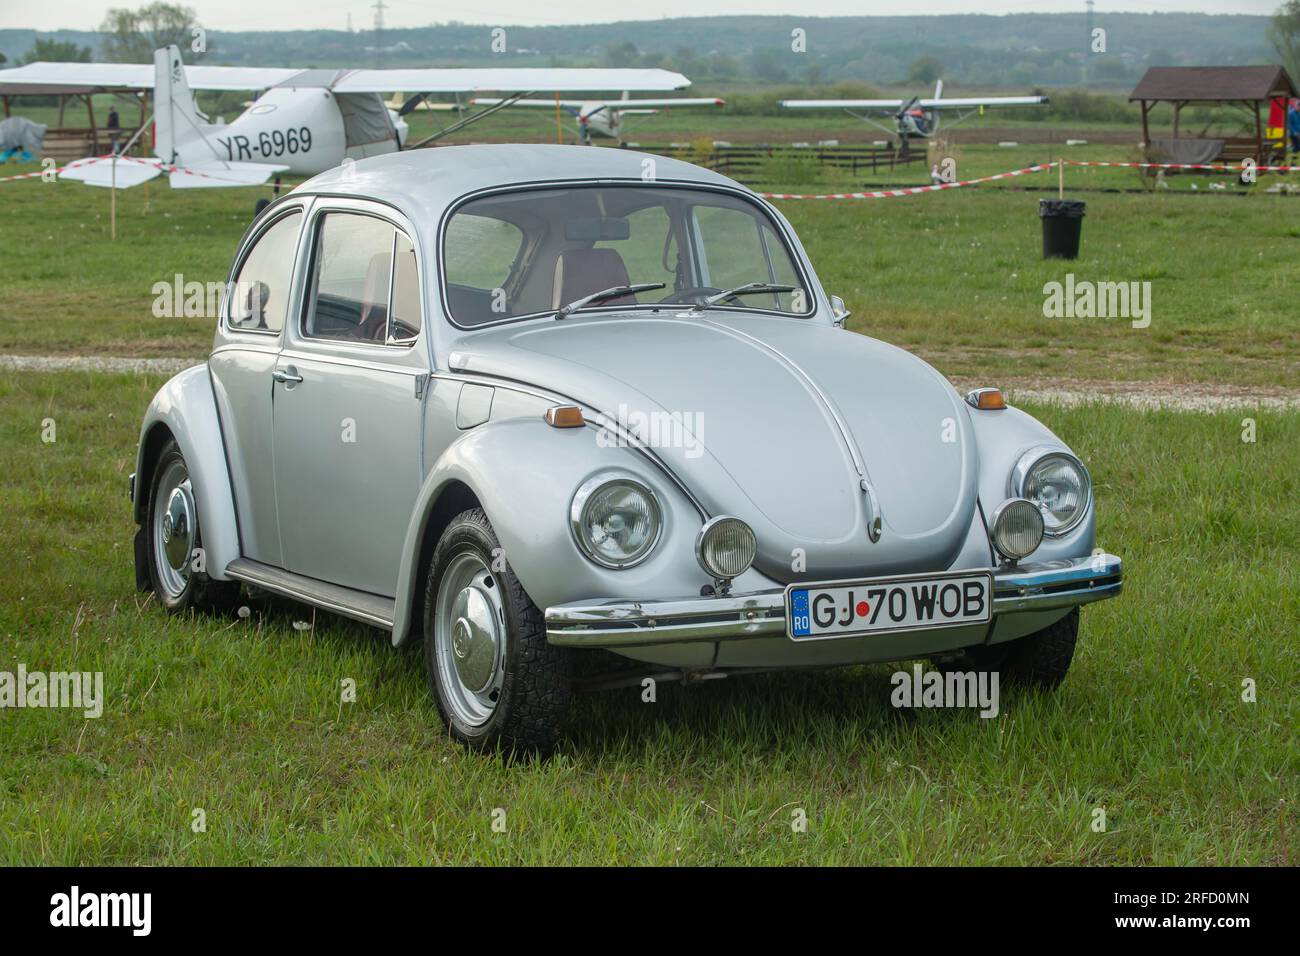 Targu-Jiu, Gorj, Romania - April 29, 2023: Vintage Volkswagen beetle 1300 at the exhibition at the Targu-Jiu air show, Romania Stock Photo